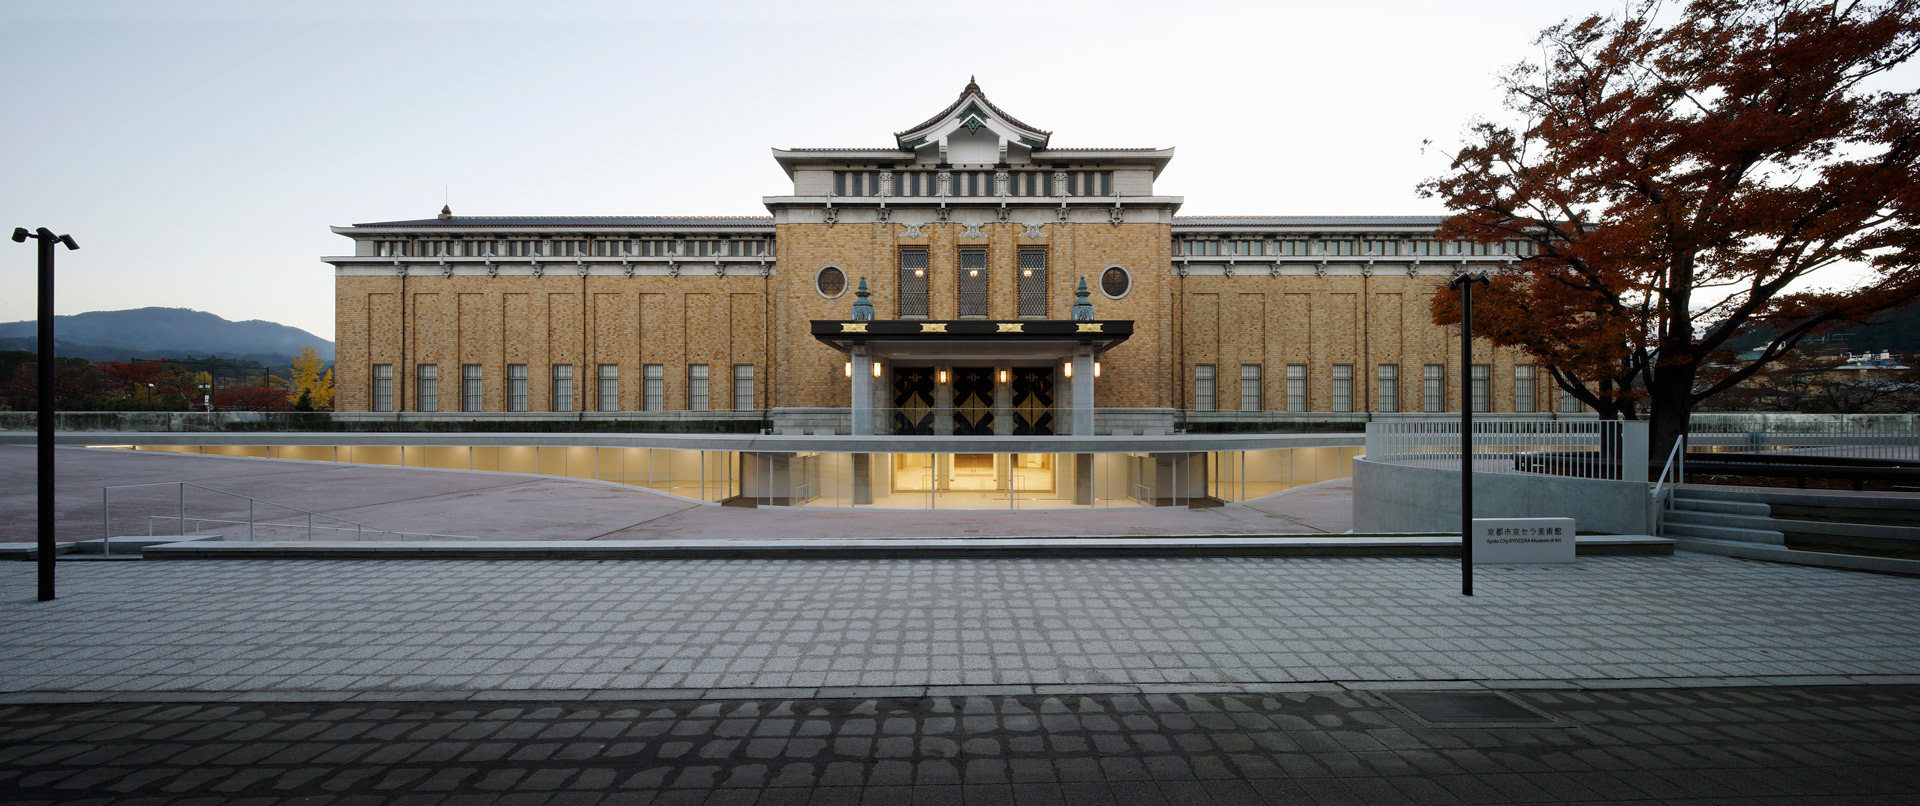 DAN, Daily Architecture News Watch: Jun Aoki of AS joins inDETAIL speaker  series - DAN